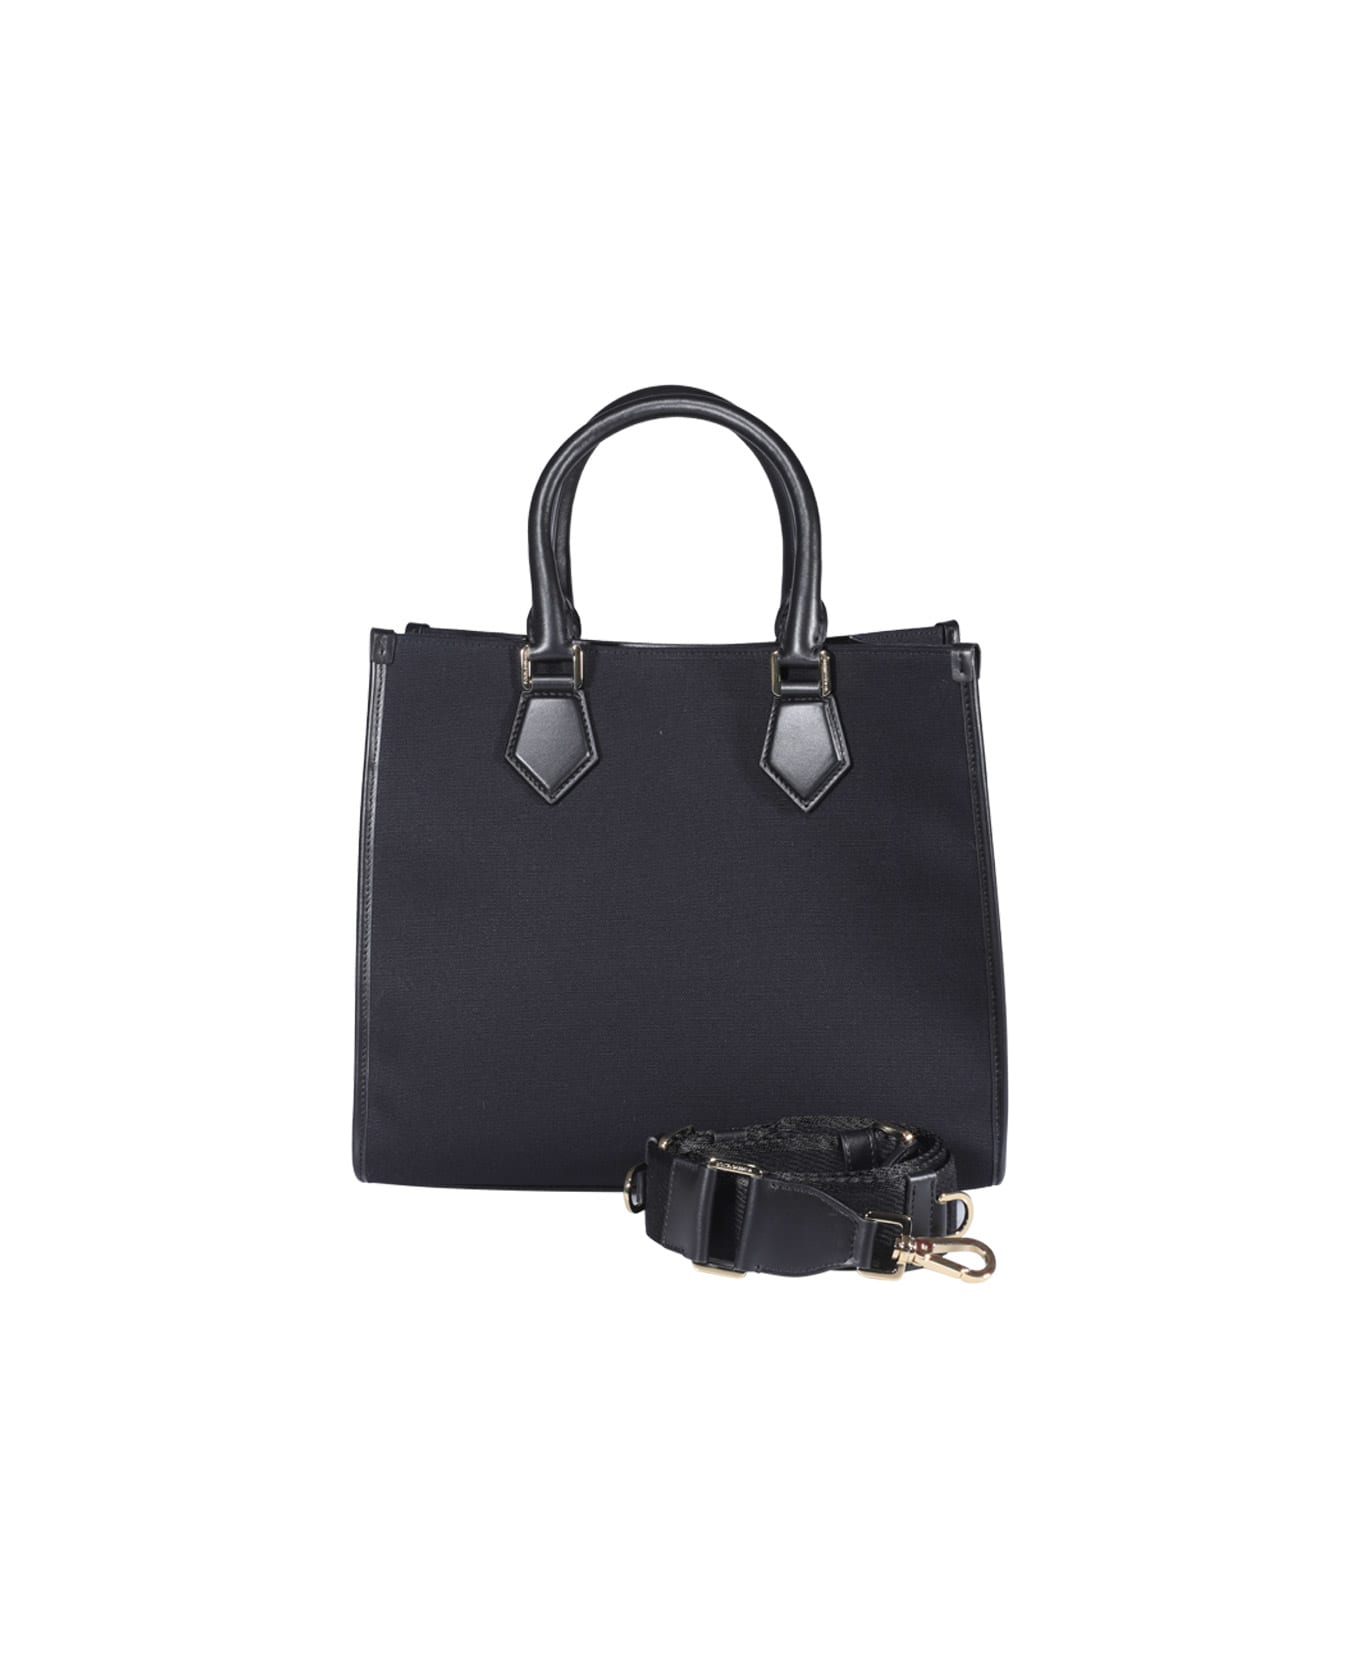 Dolce & Gabbana Dg Logo Shopping Bag - Nero